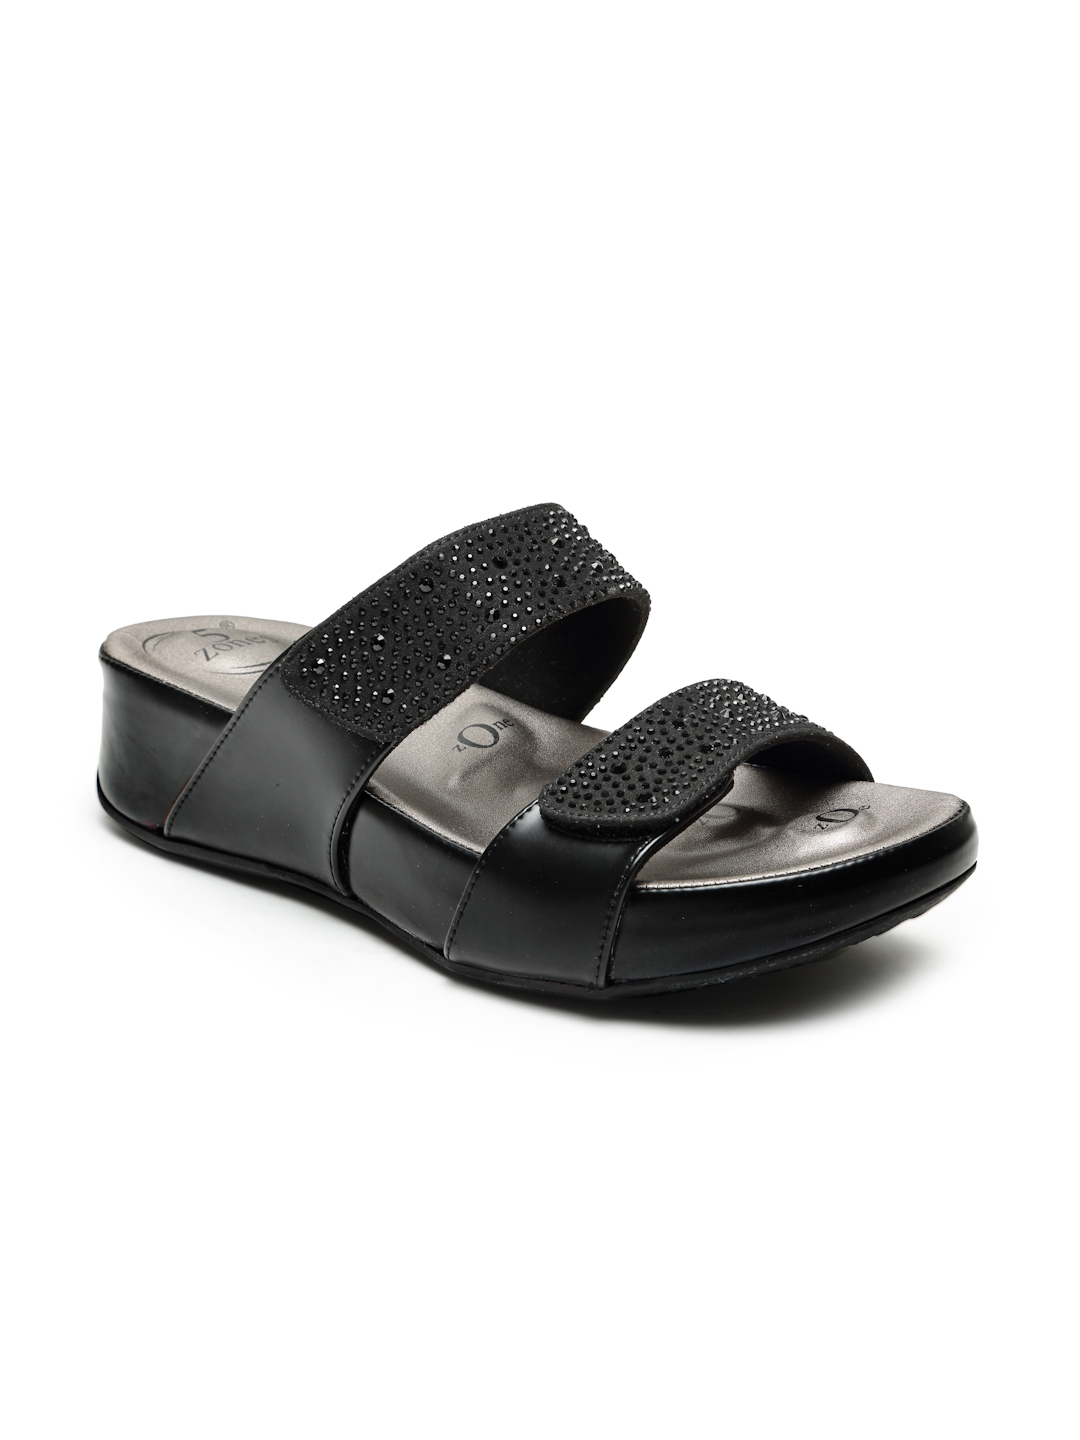 Buy Von Wellx Germany Comfort Women's Black Casual Sandals Paula Online in Qatar